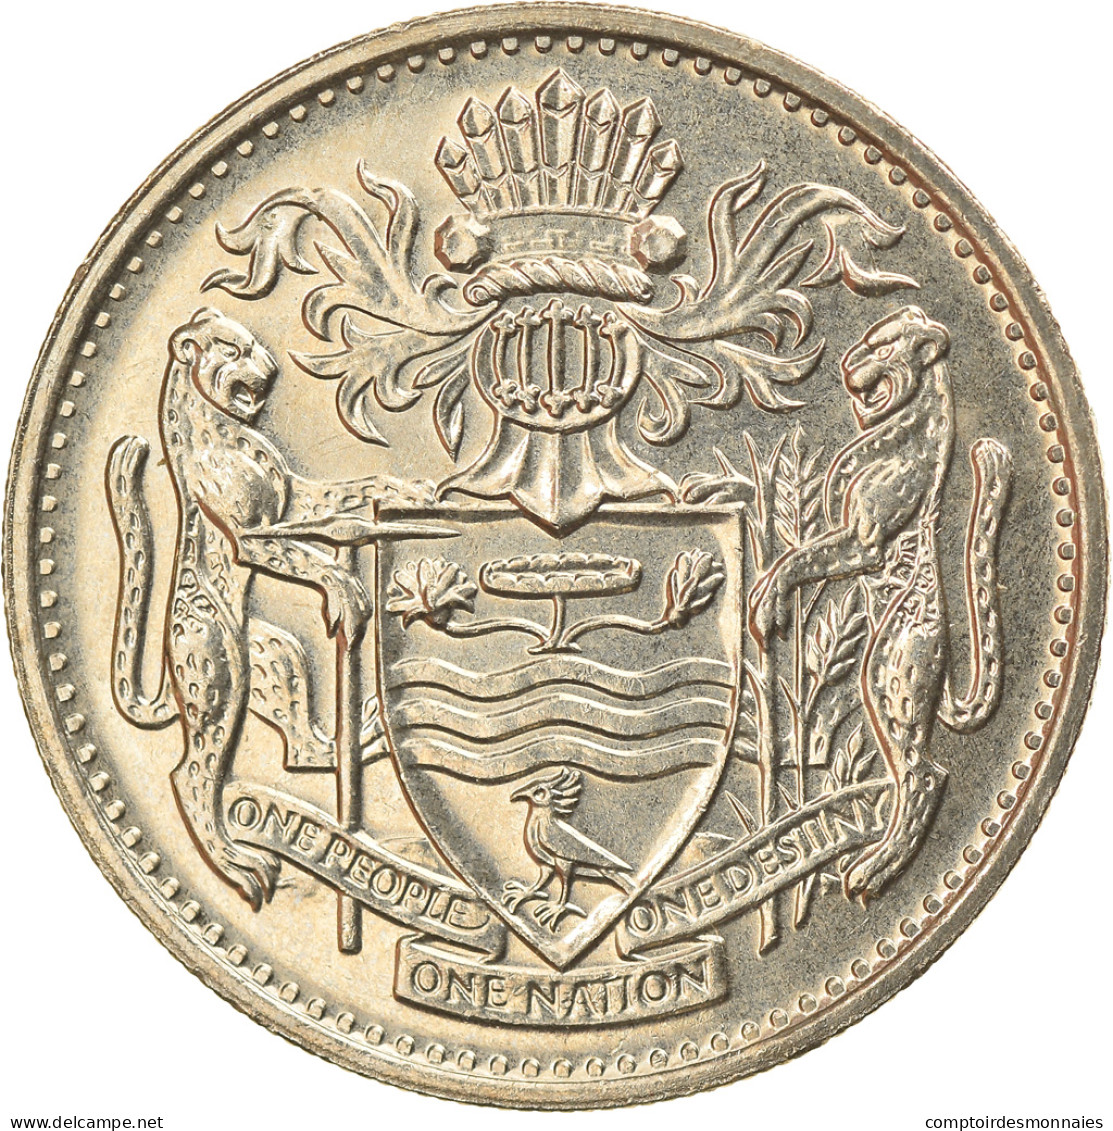 Monnaie, Guyana, 25 Cents, 1989, SUP, Copper-nickel, KM:34 - Guyana